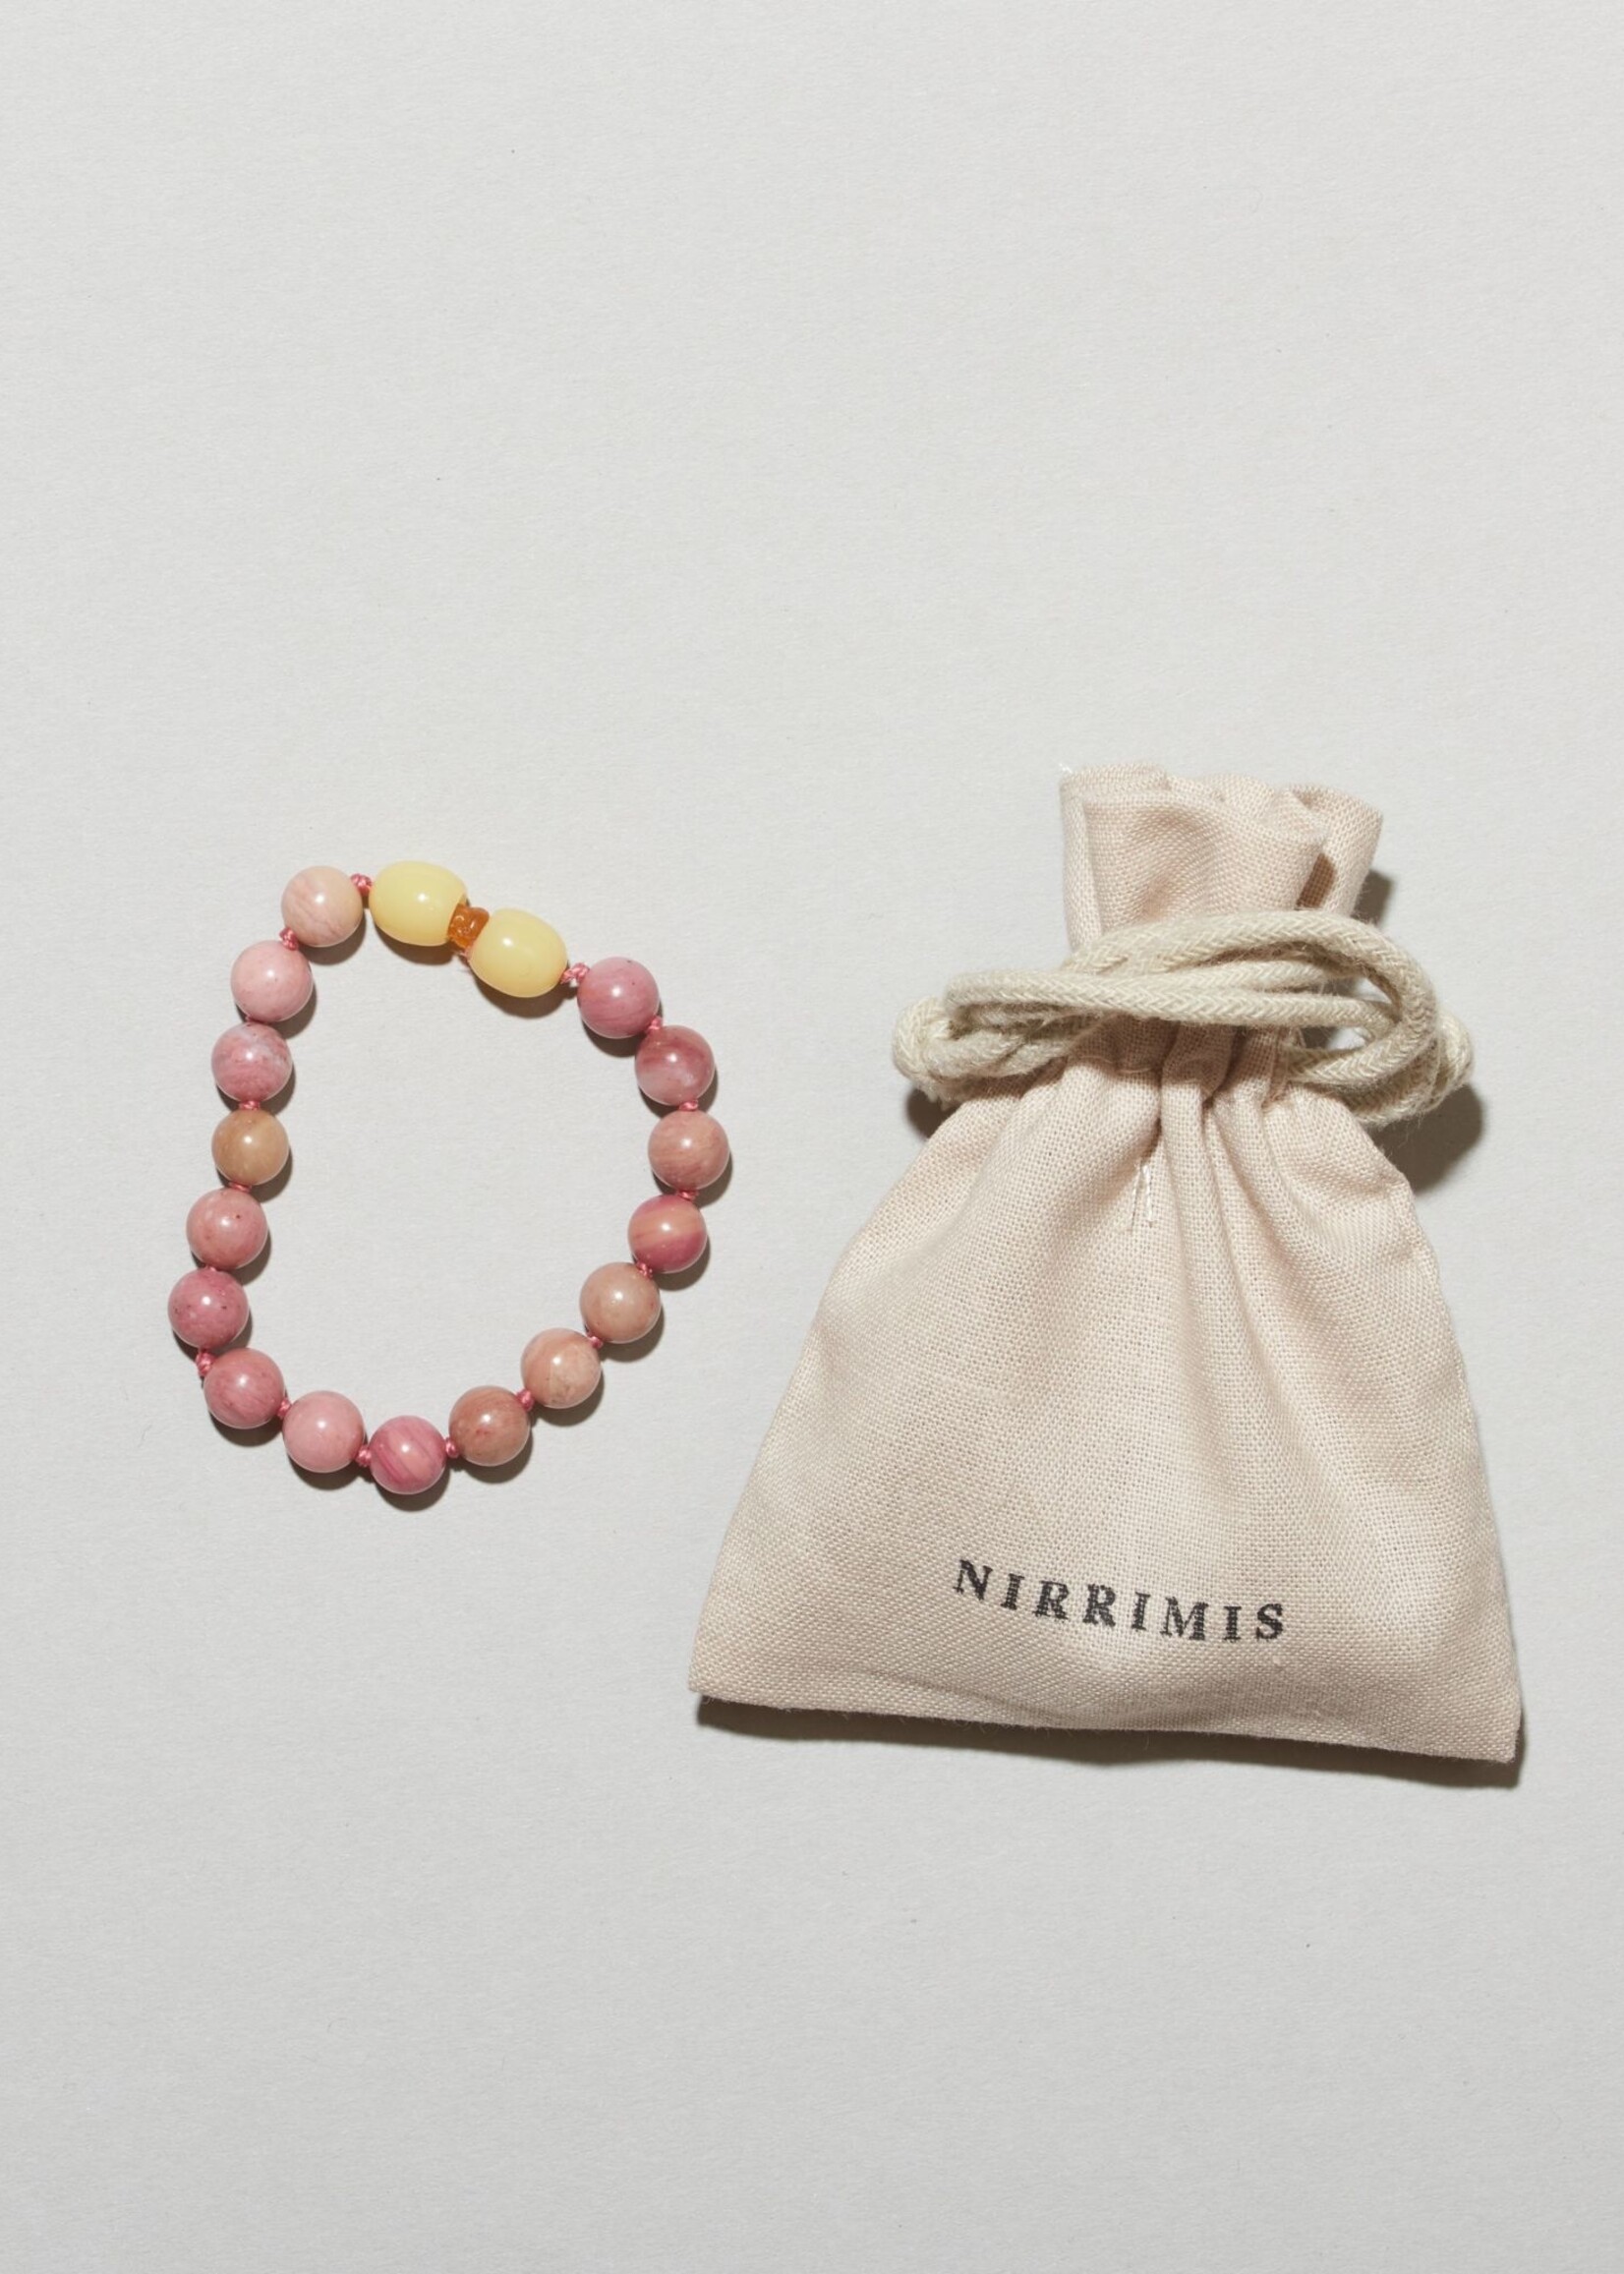 Nirrimis Nirrimis | Berry - Kids bracelet (14 cm)